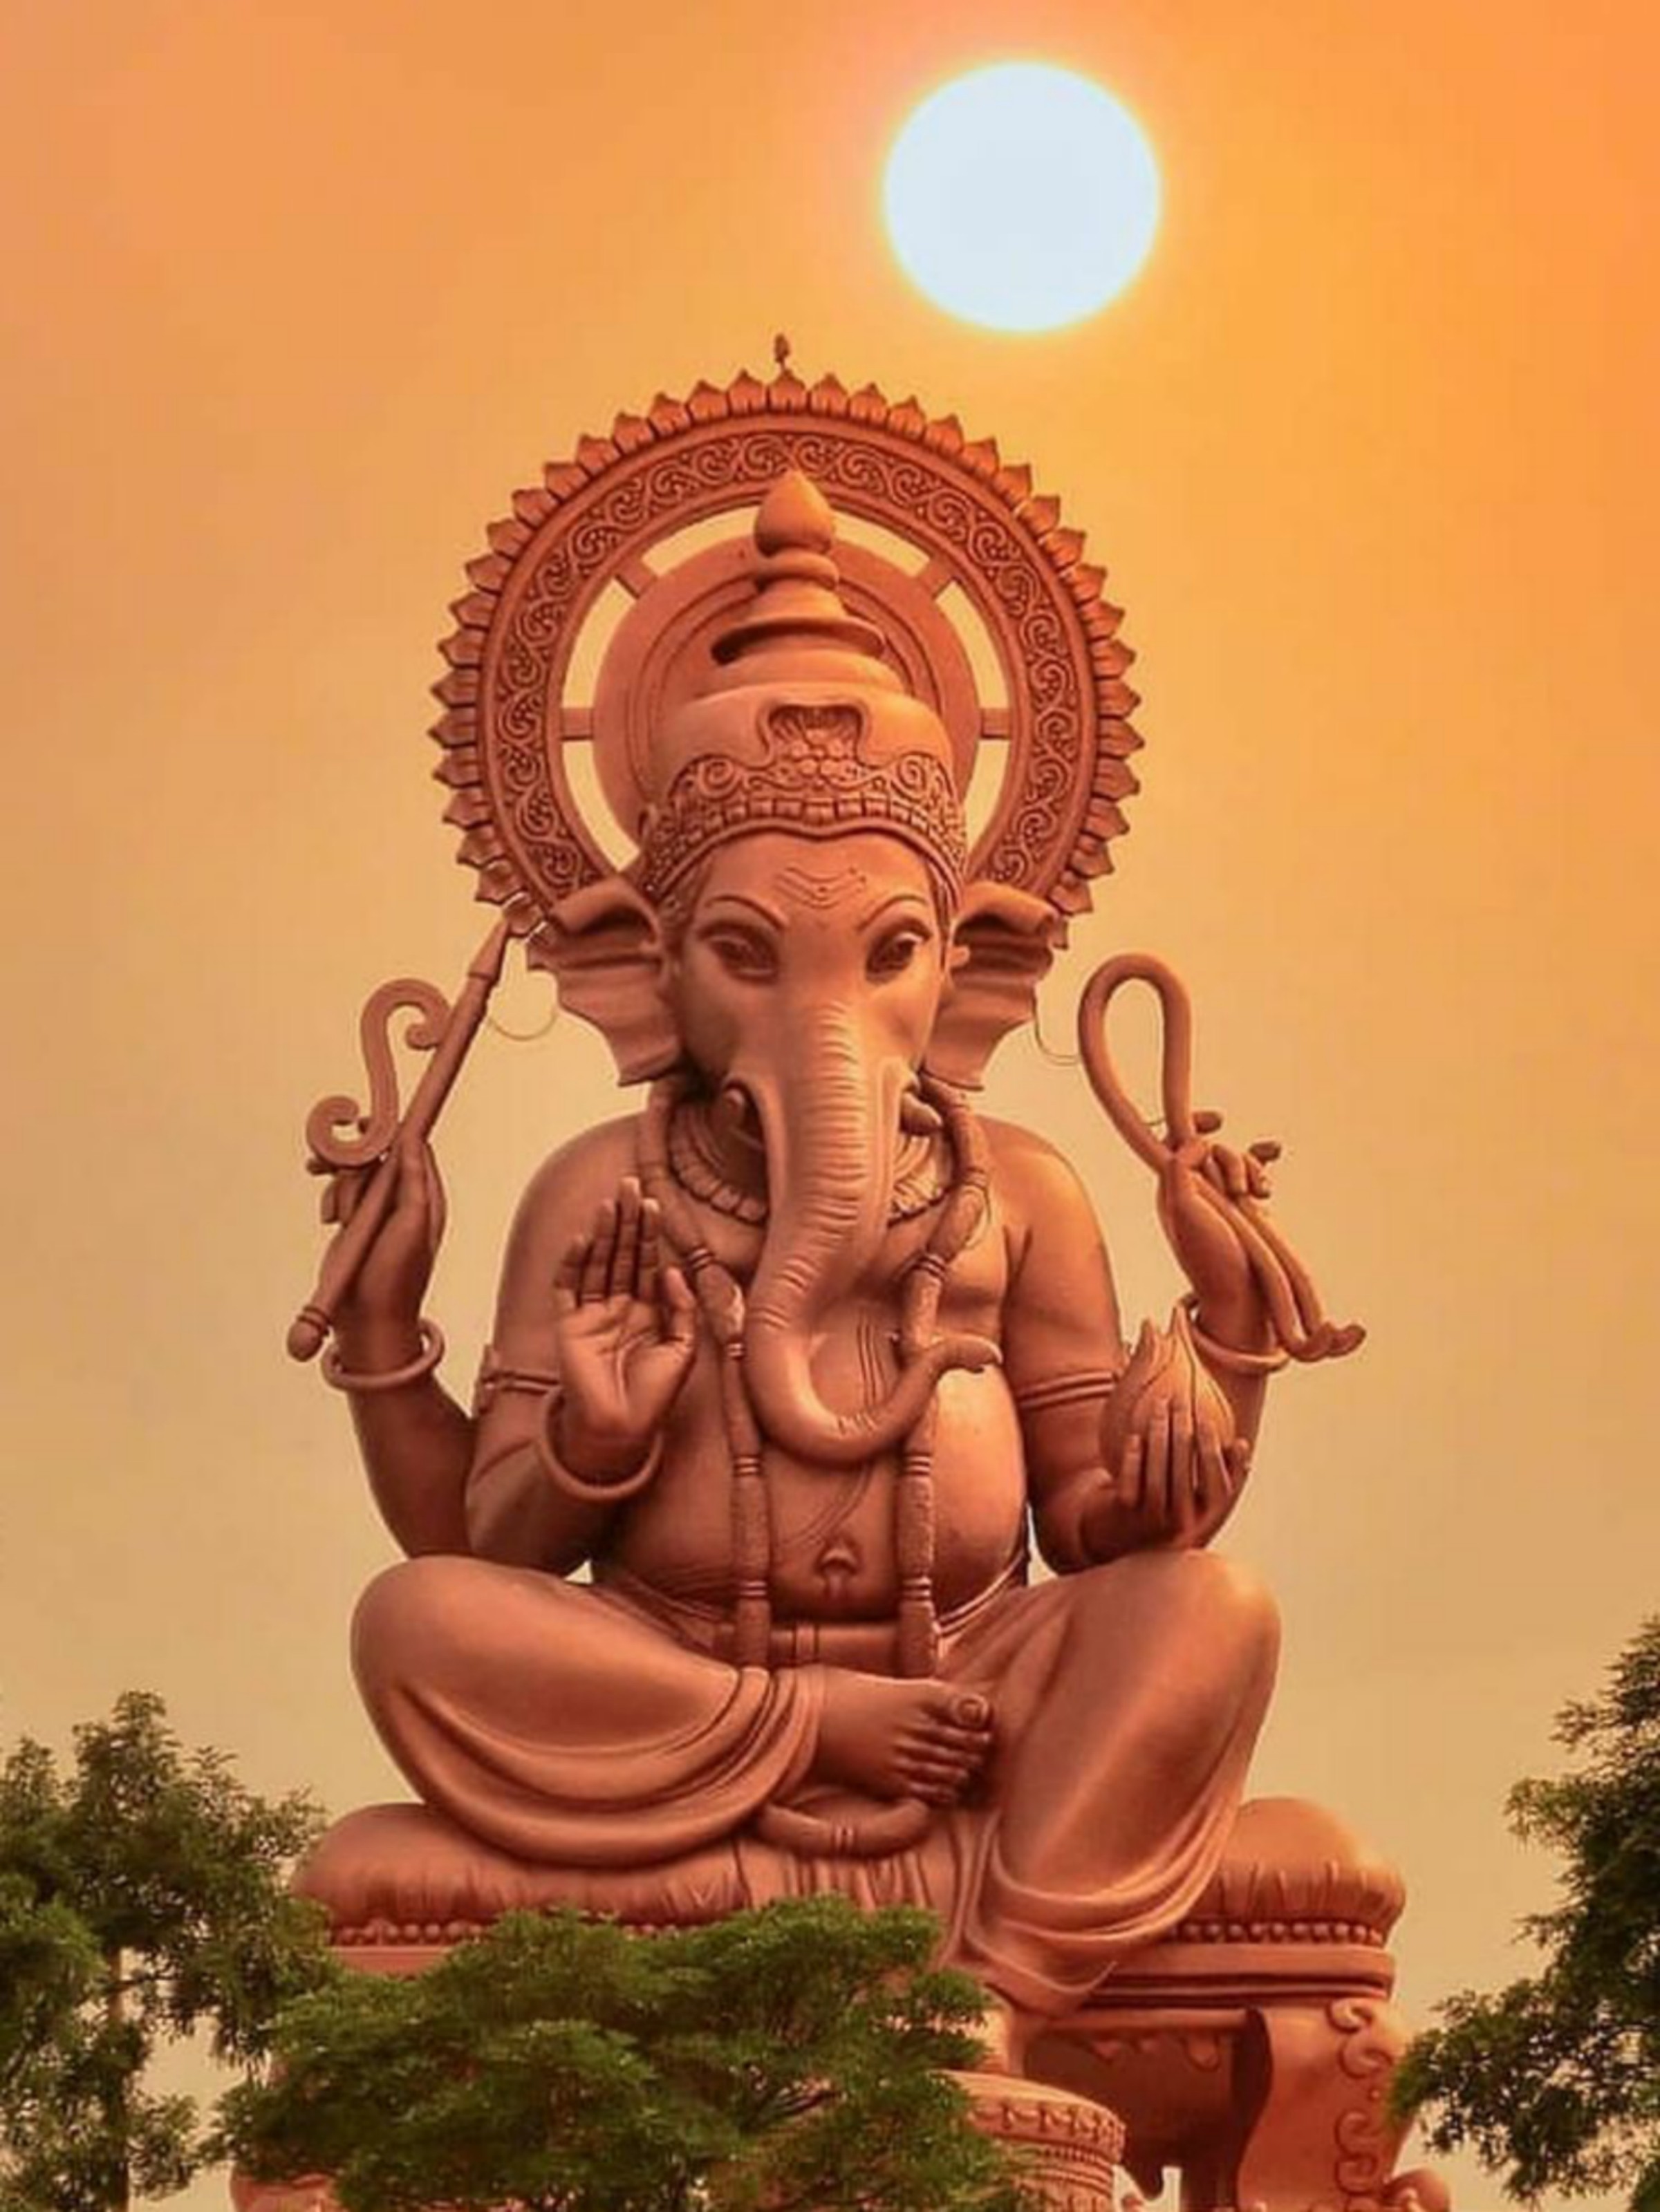 575 Ganesh 3d Images, Stock Photos & Vectors | Shutterstock